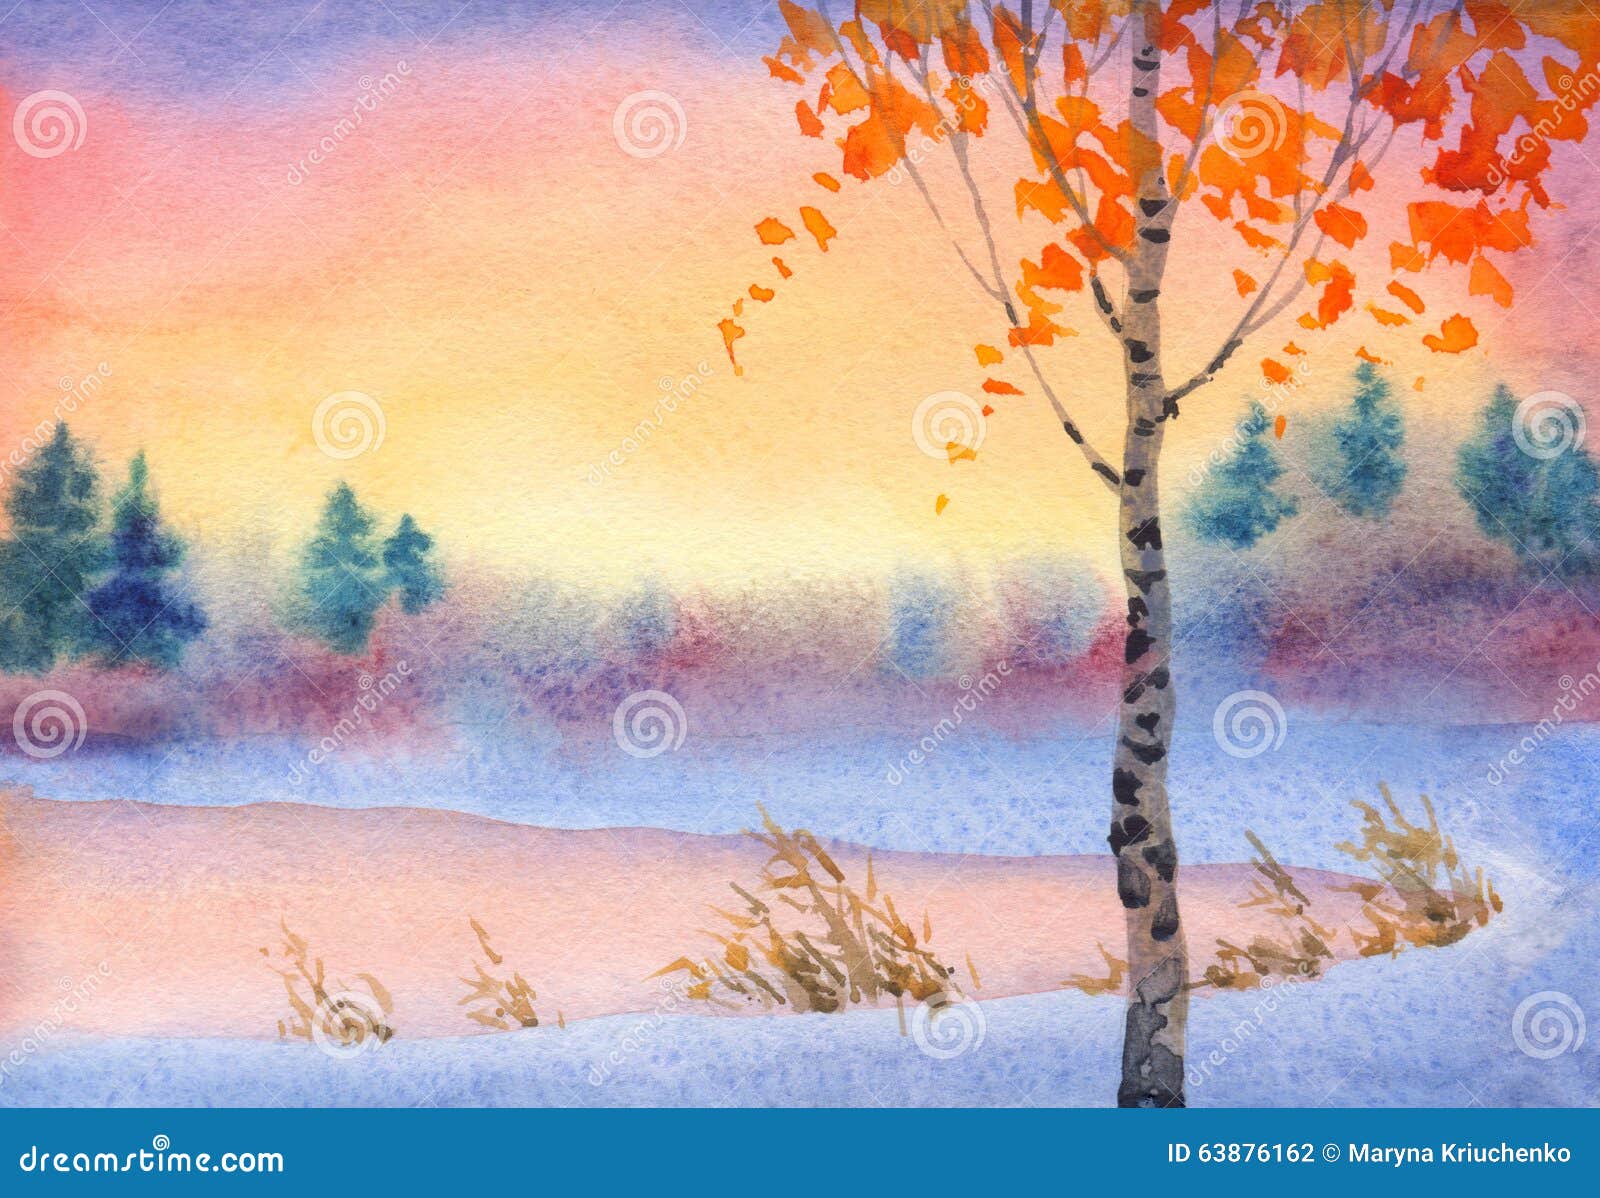 Watercolor Winter Landscape Evening Sky Over Lake Stock Illustration Illustration Of Lake Bush